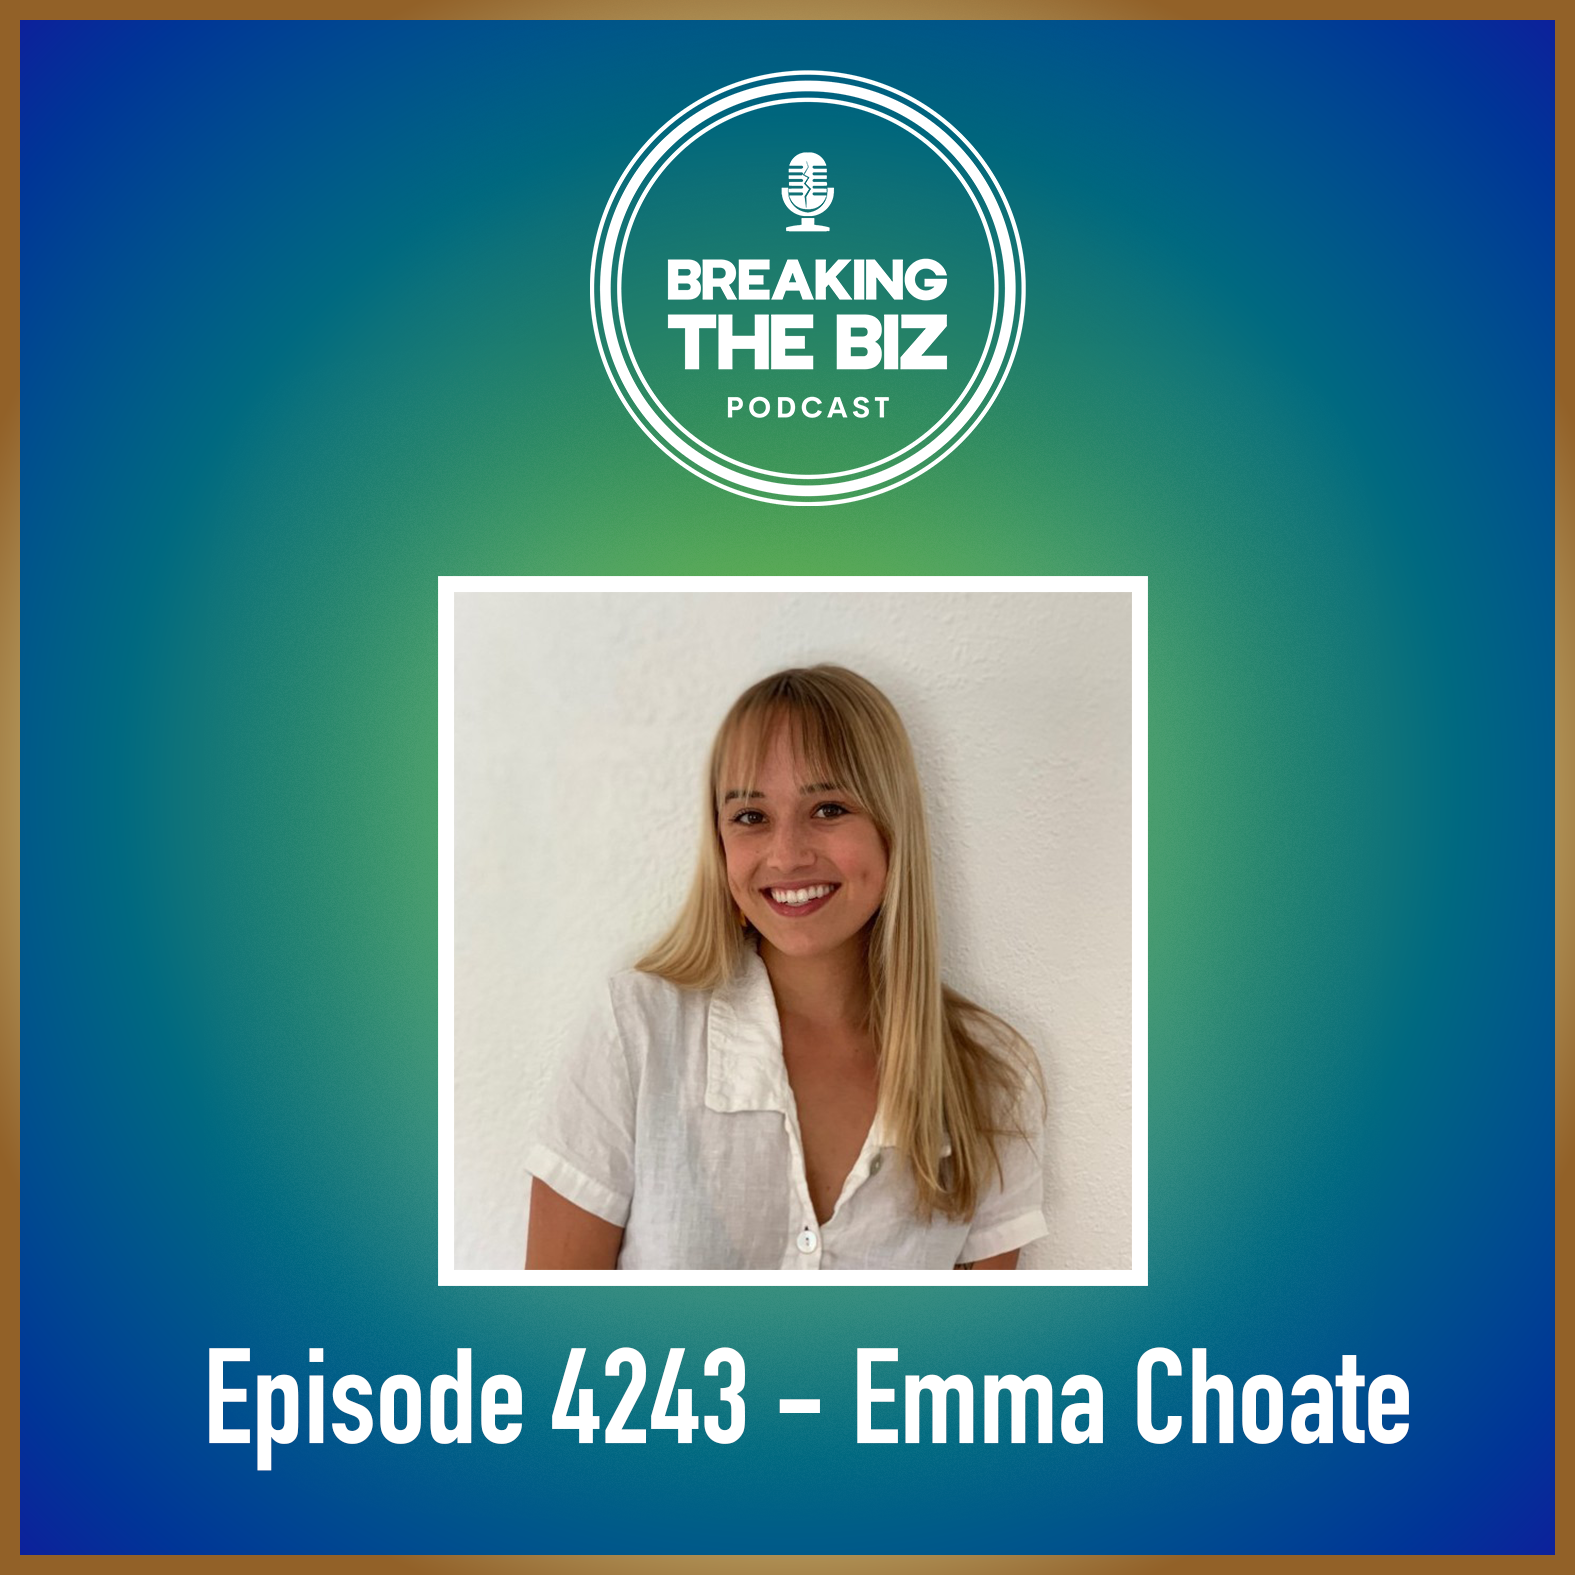 Episode 4243 - Emma Choate